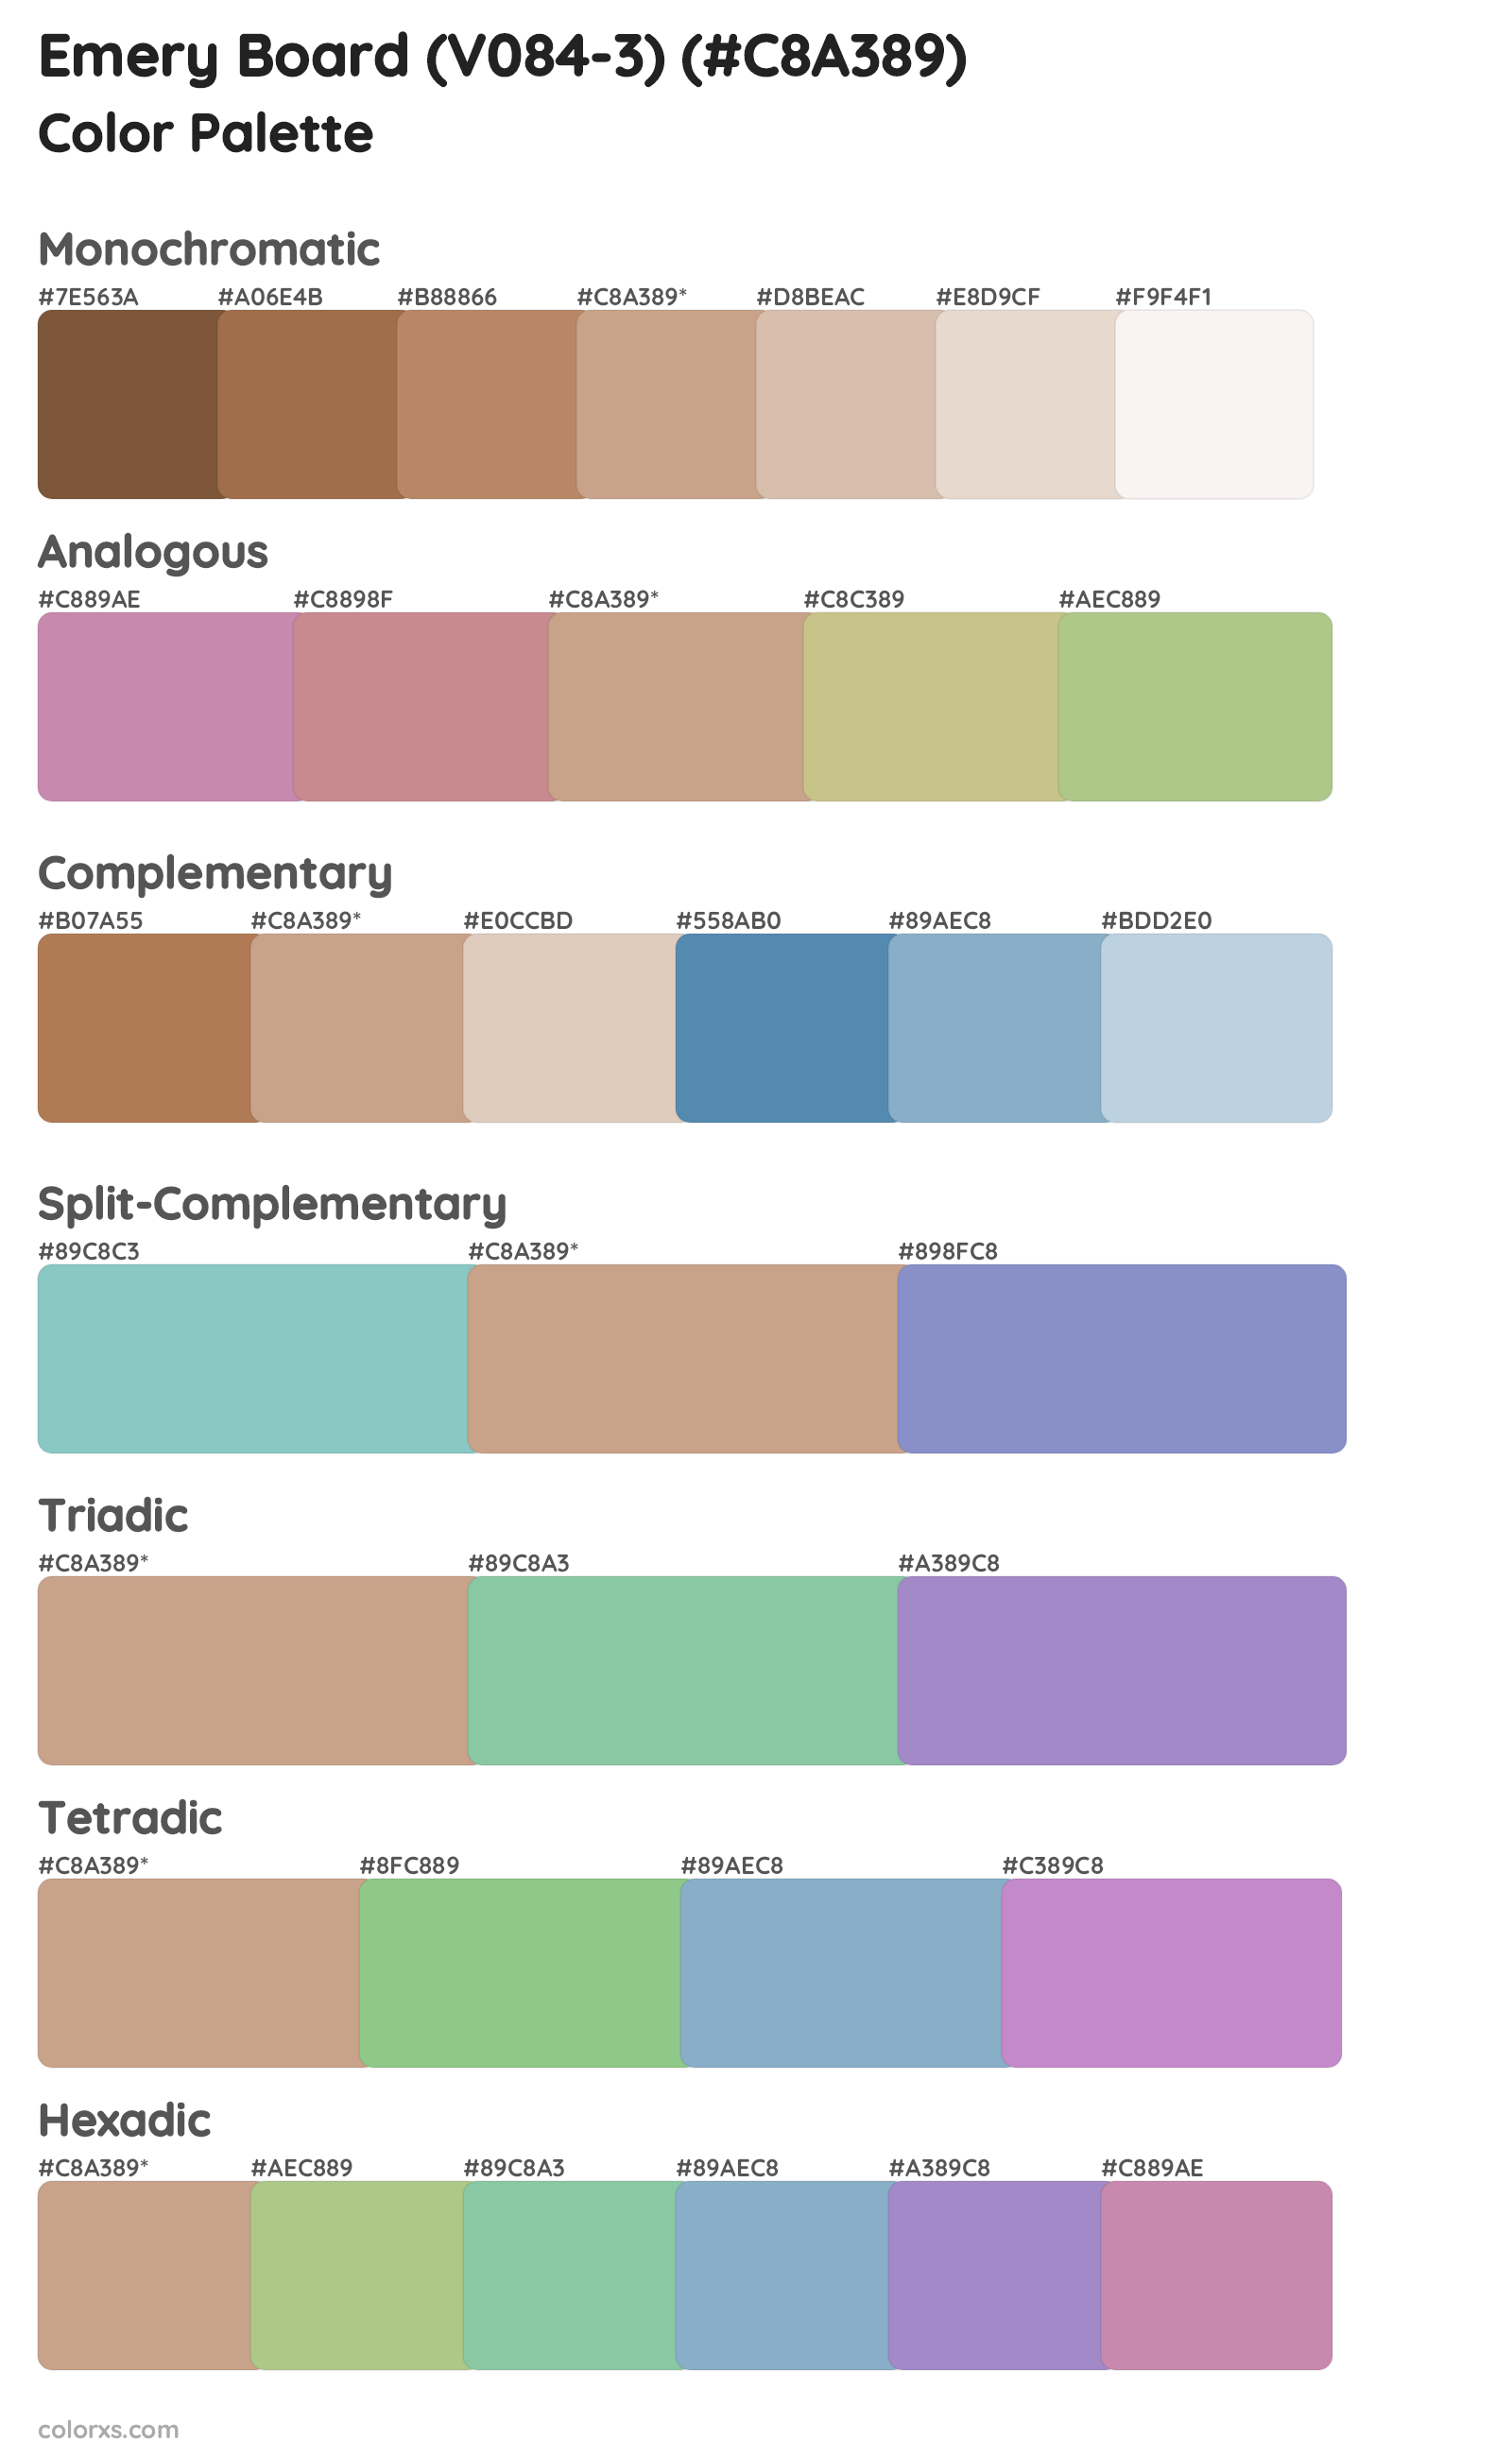 Emery Board (V084-3) Color Scheme Palettes